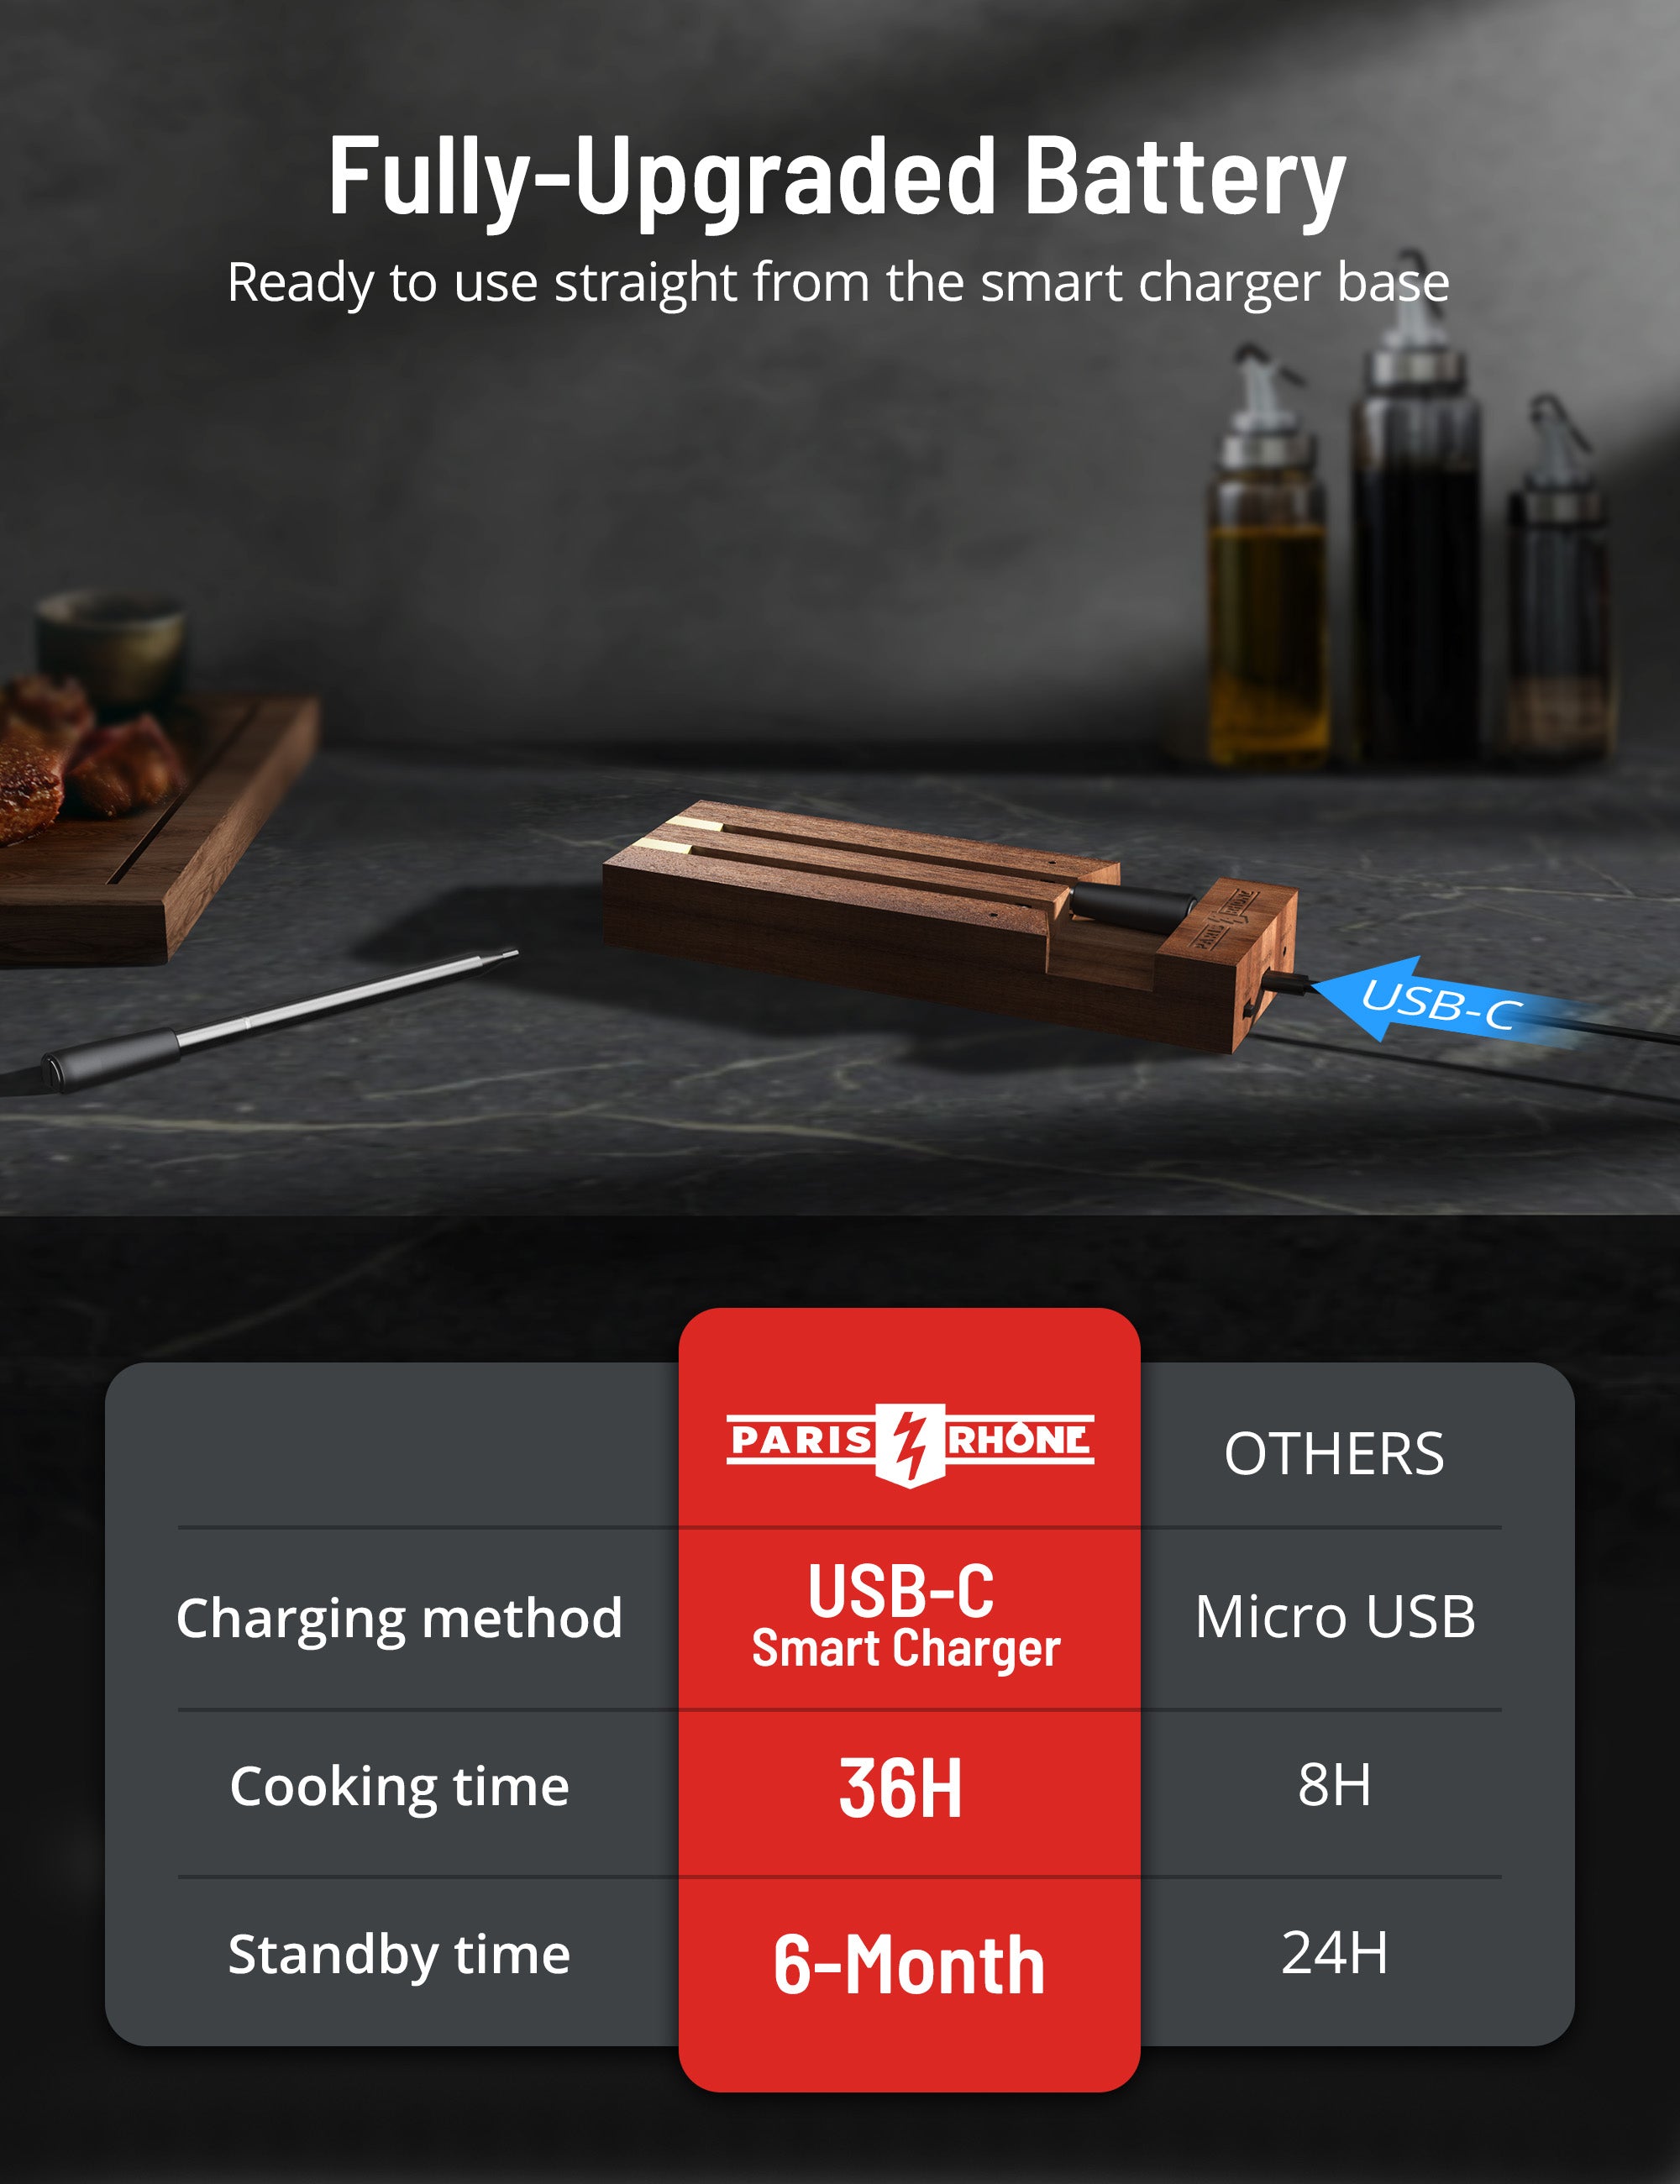 Paris Rhône Meat Thermometer TM001, Advanced App Cooking Guides Wireless, 1-Probe / Black Walnut